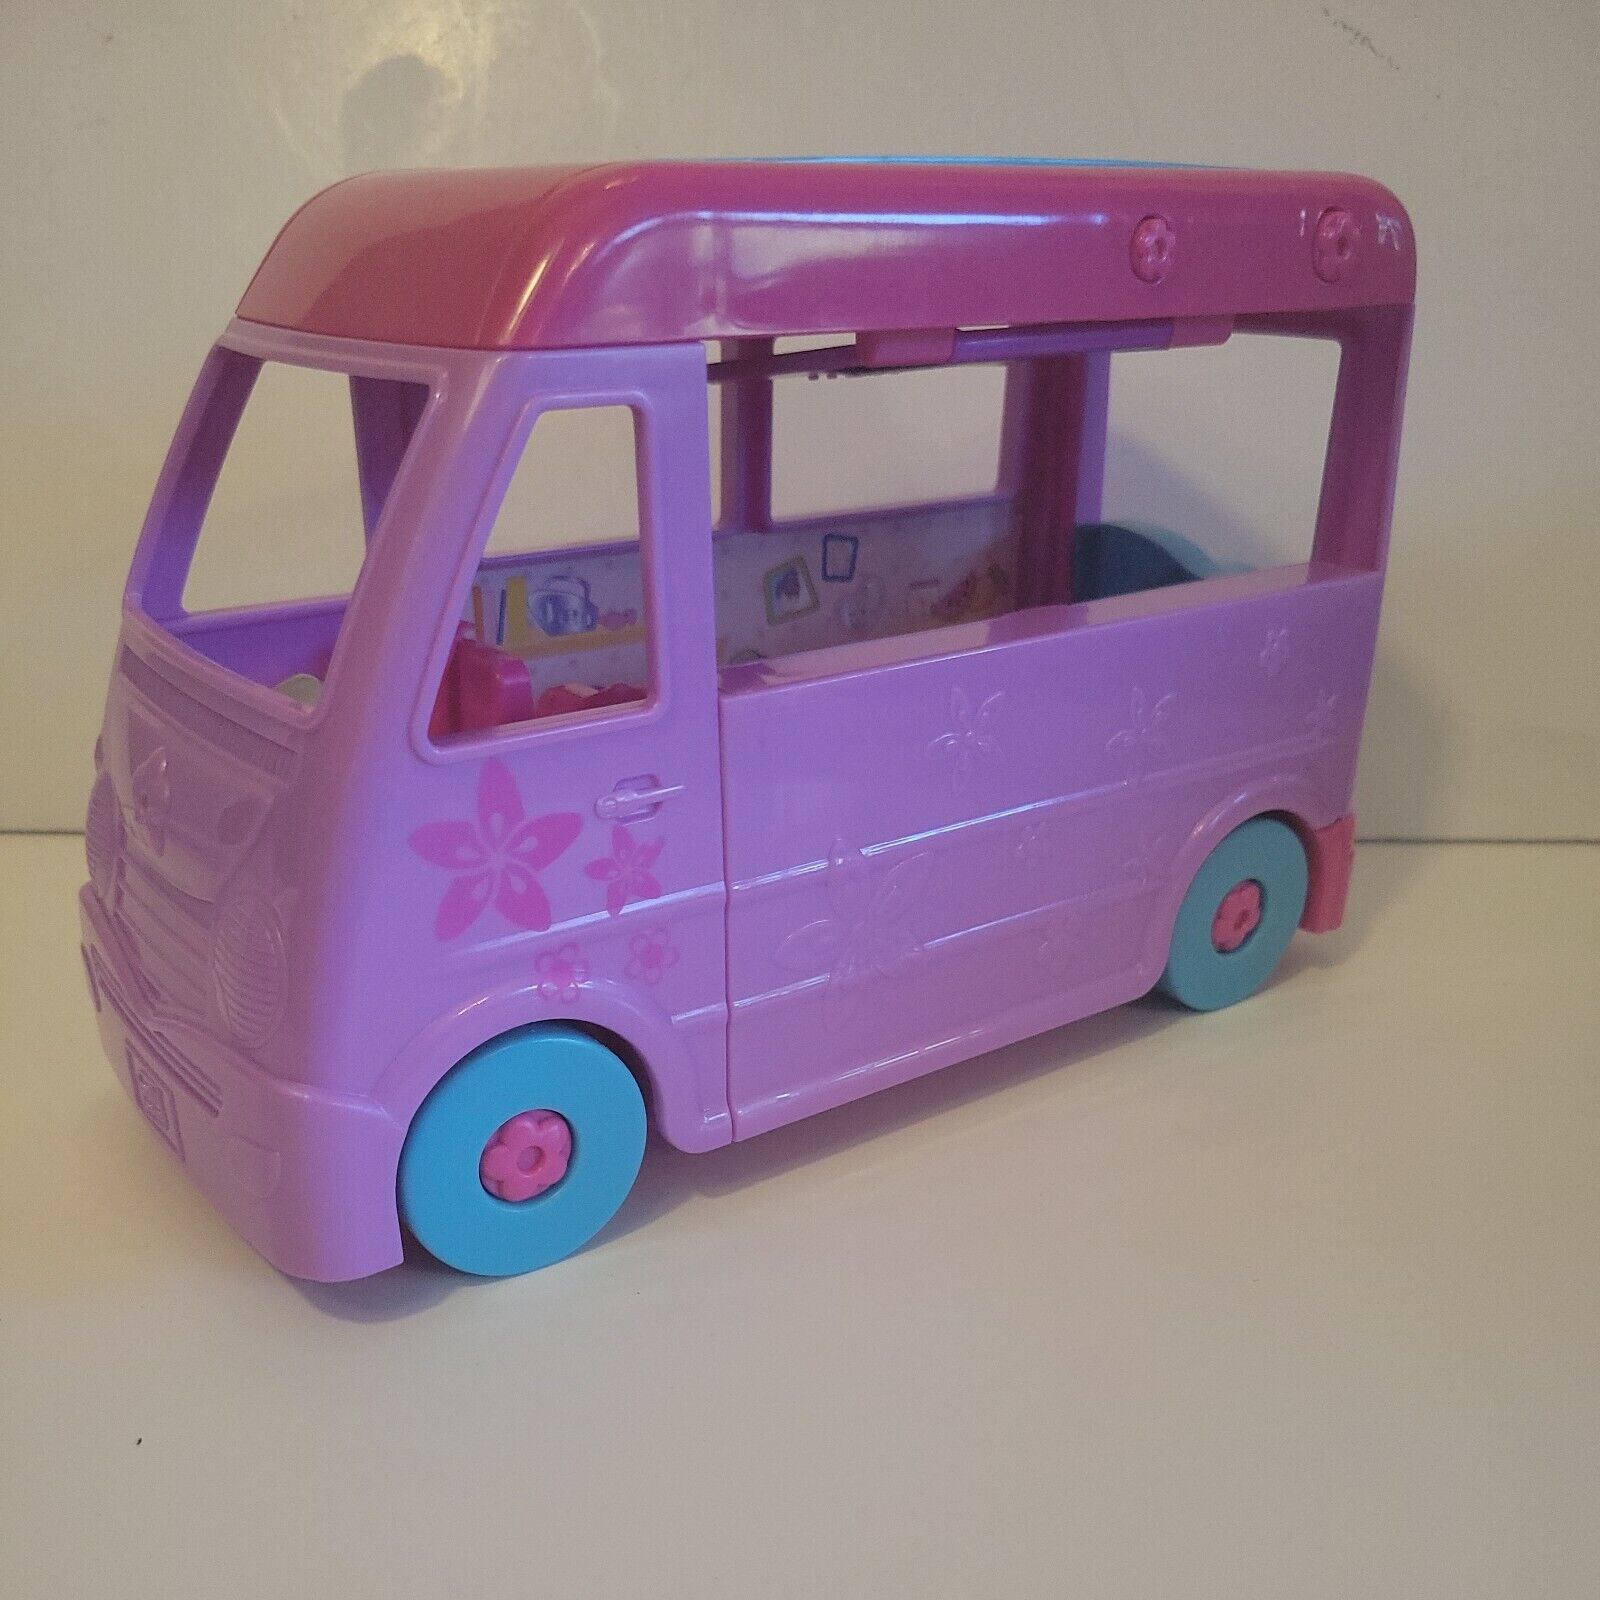 Polly Pocket - Playsets Antigo Completo - Trailler Pop Up Glamper Vehicle e  Pop Up Destinations, Brinquedo Mattel Usado 82983707